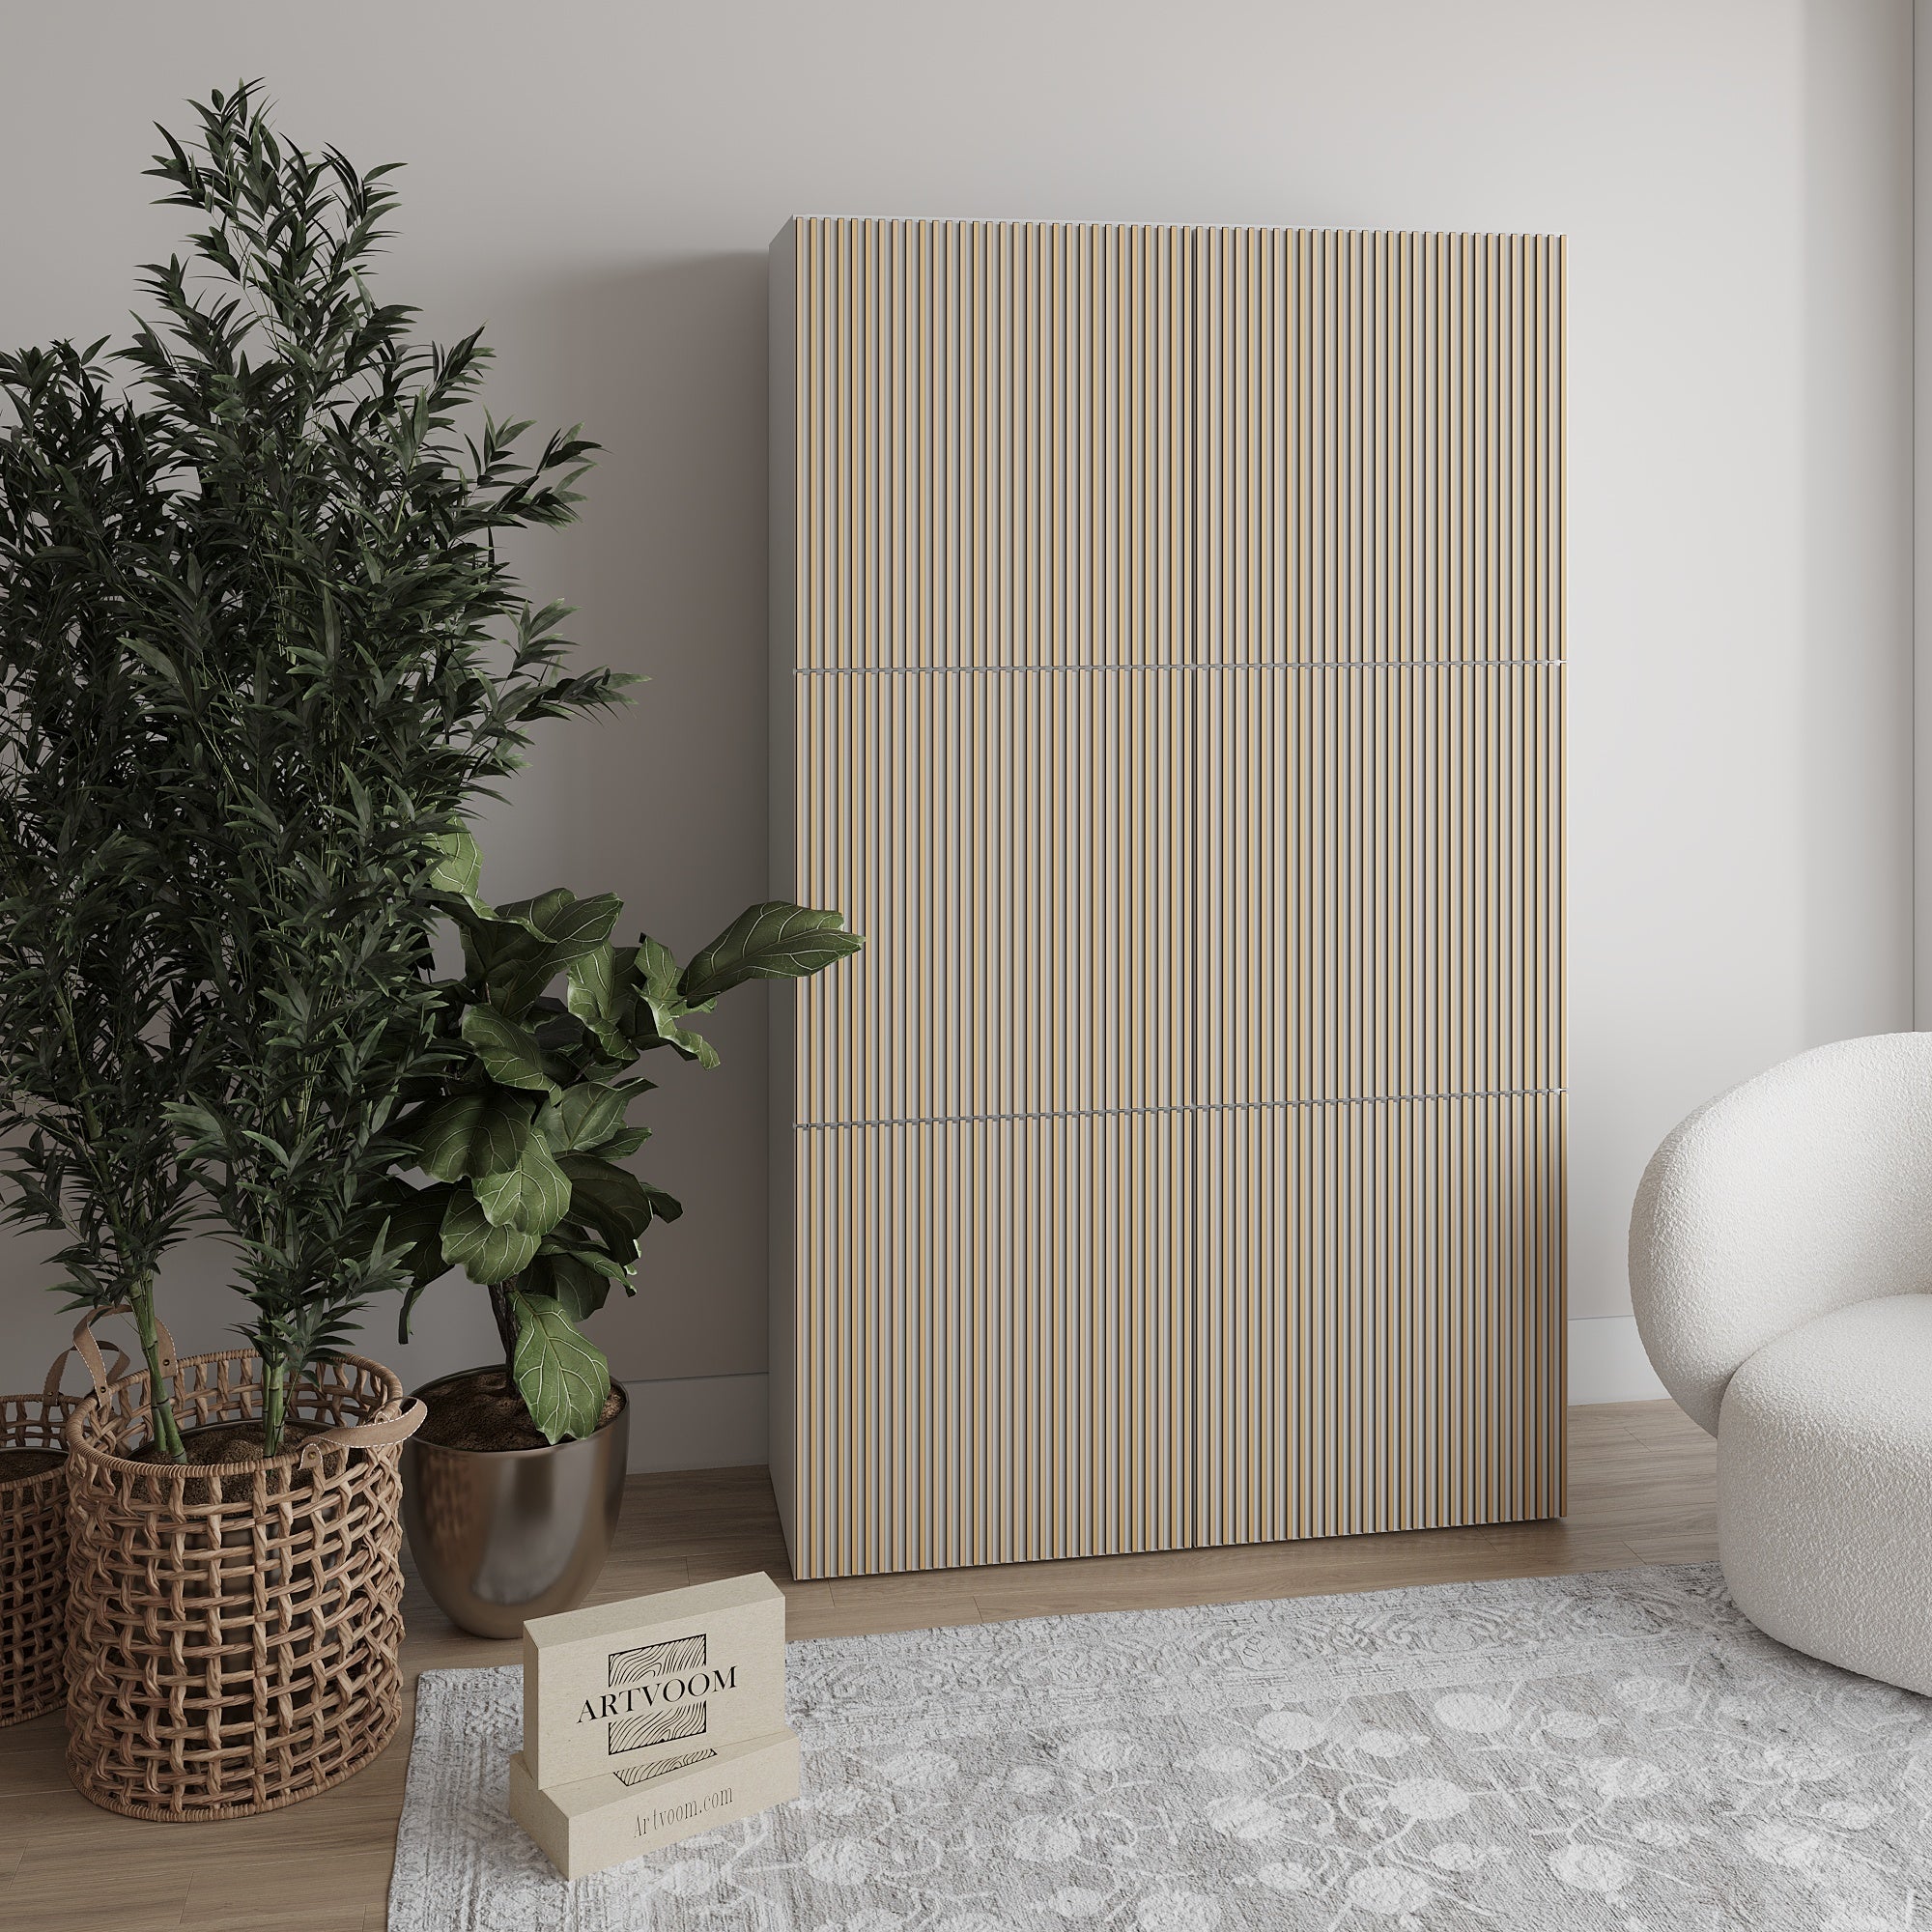 Overlay wooden slats panels for decorating ikea besta dresser 1 cm width - Artvoom